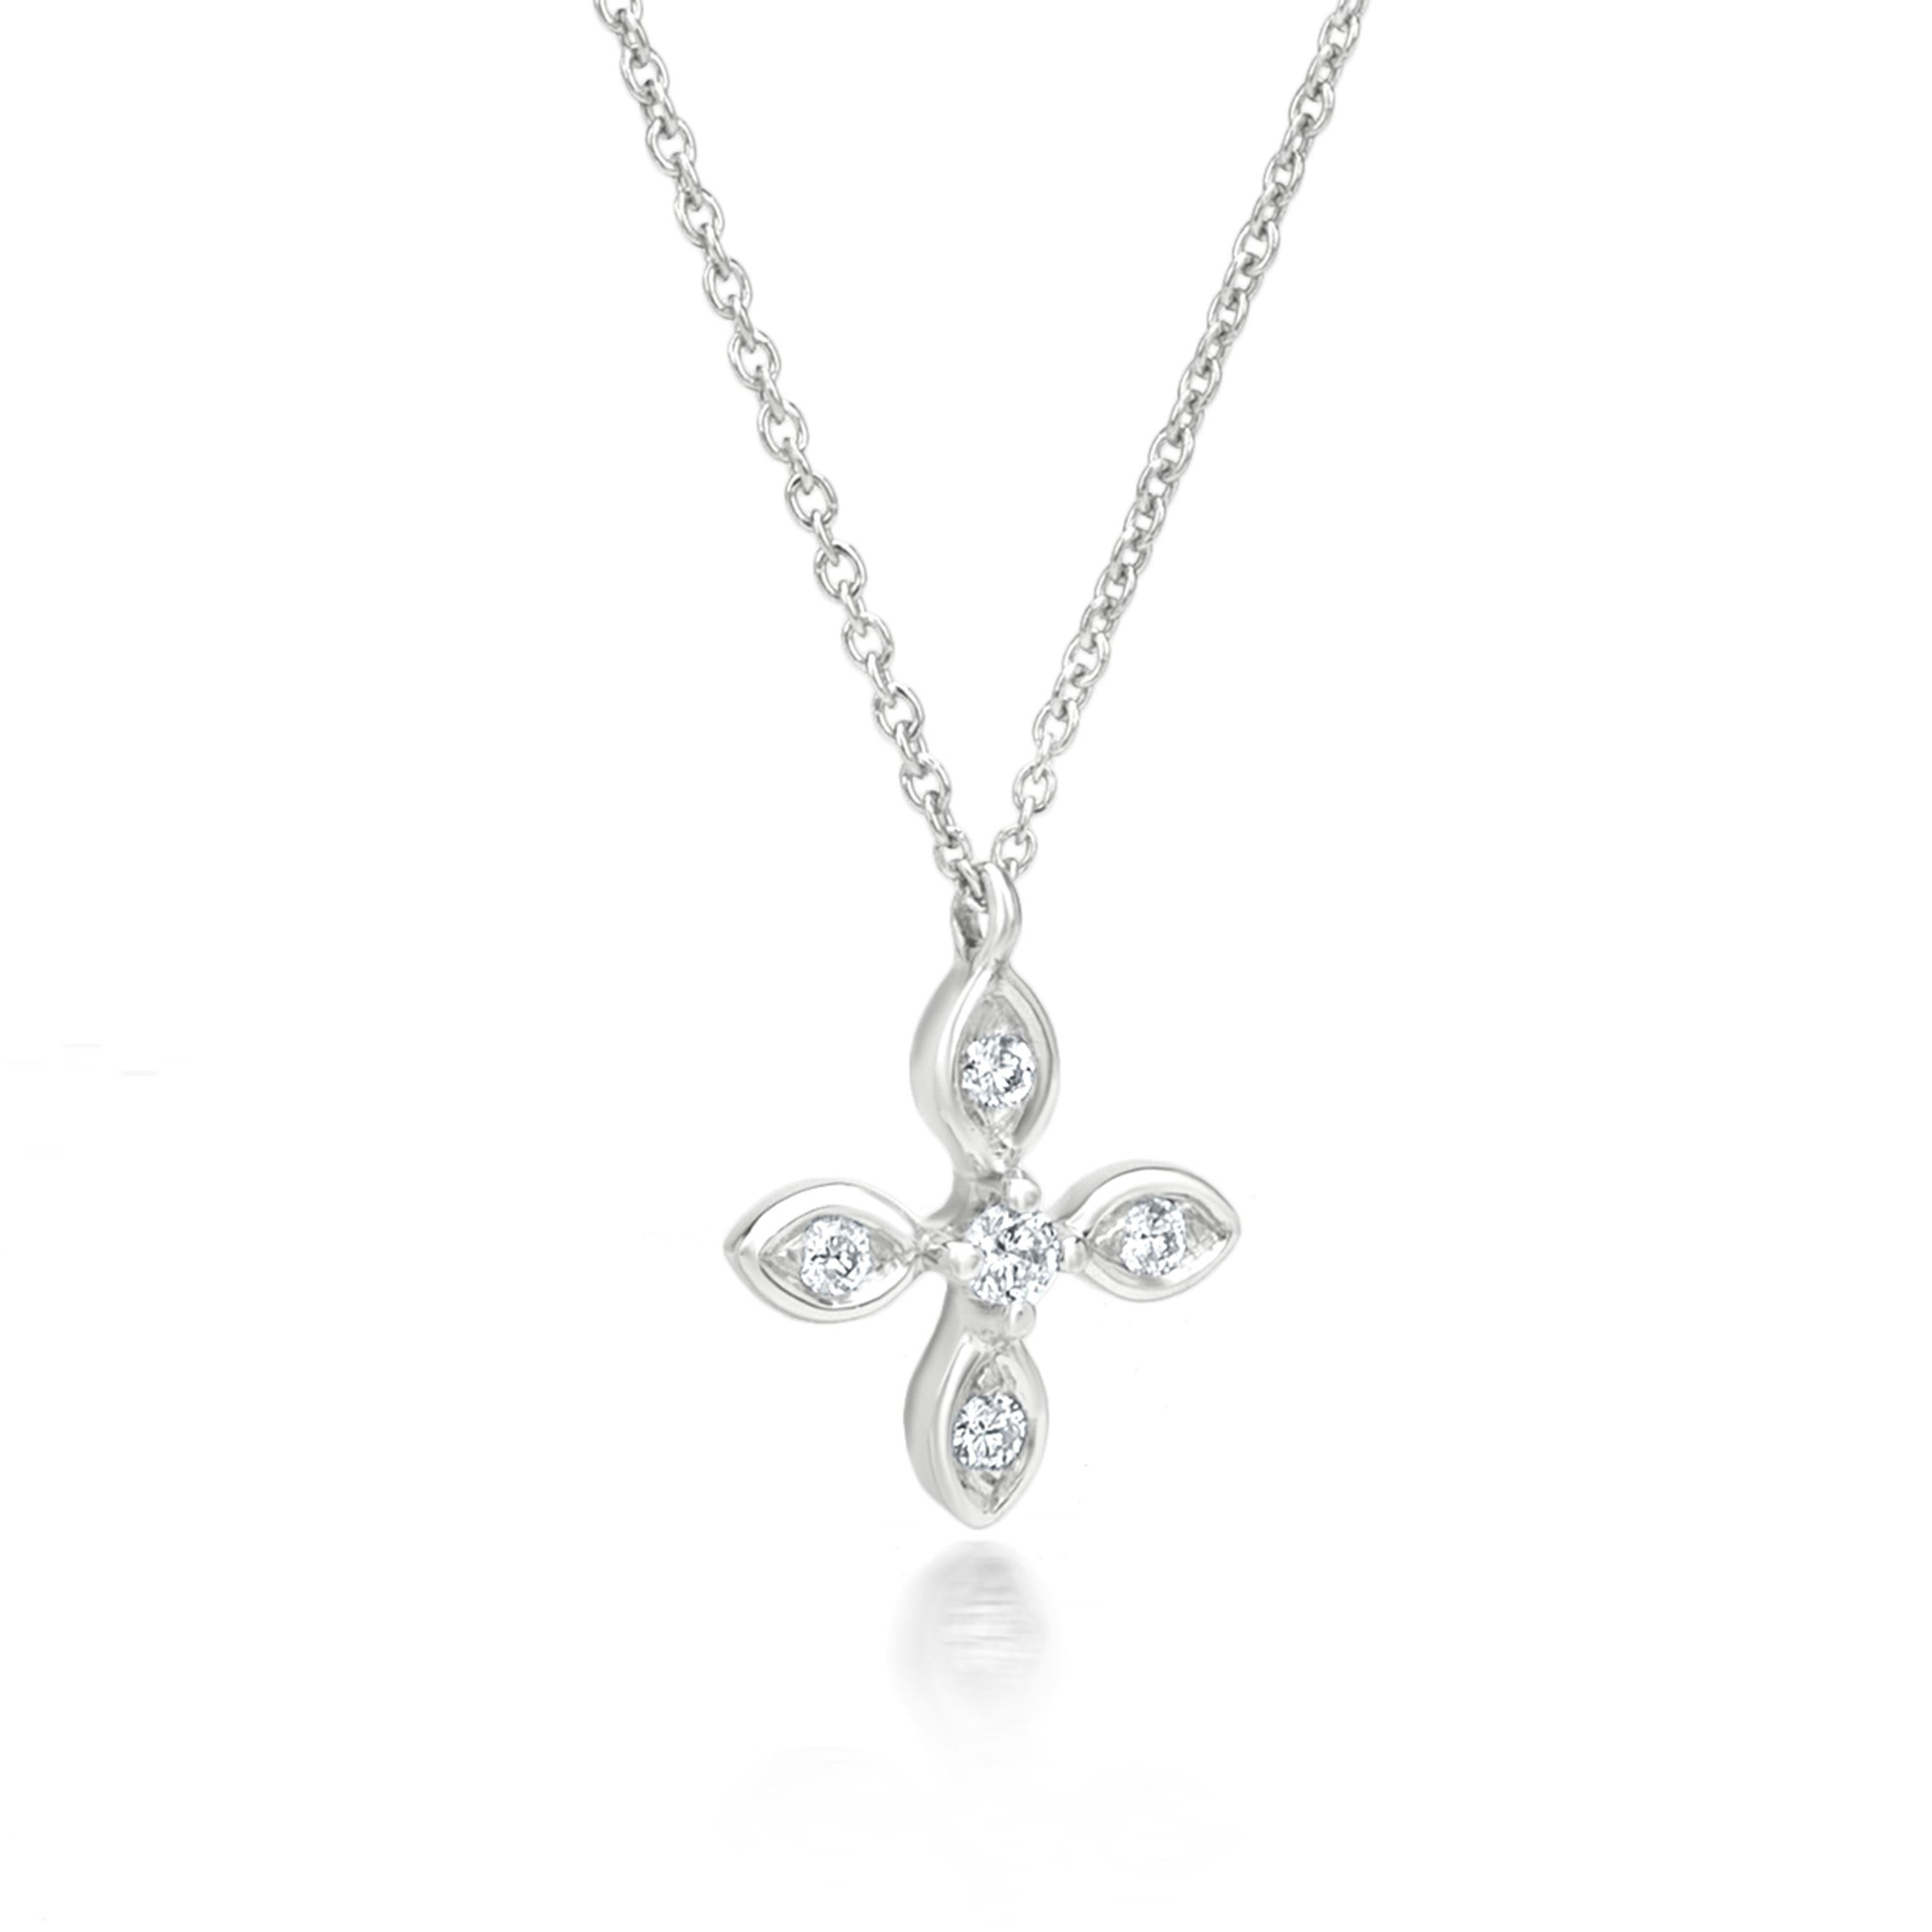 Contemporary Luxle Diamond Four Leaf Pendant Necklace in 18k White Gold